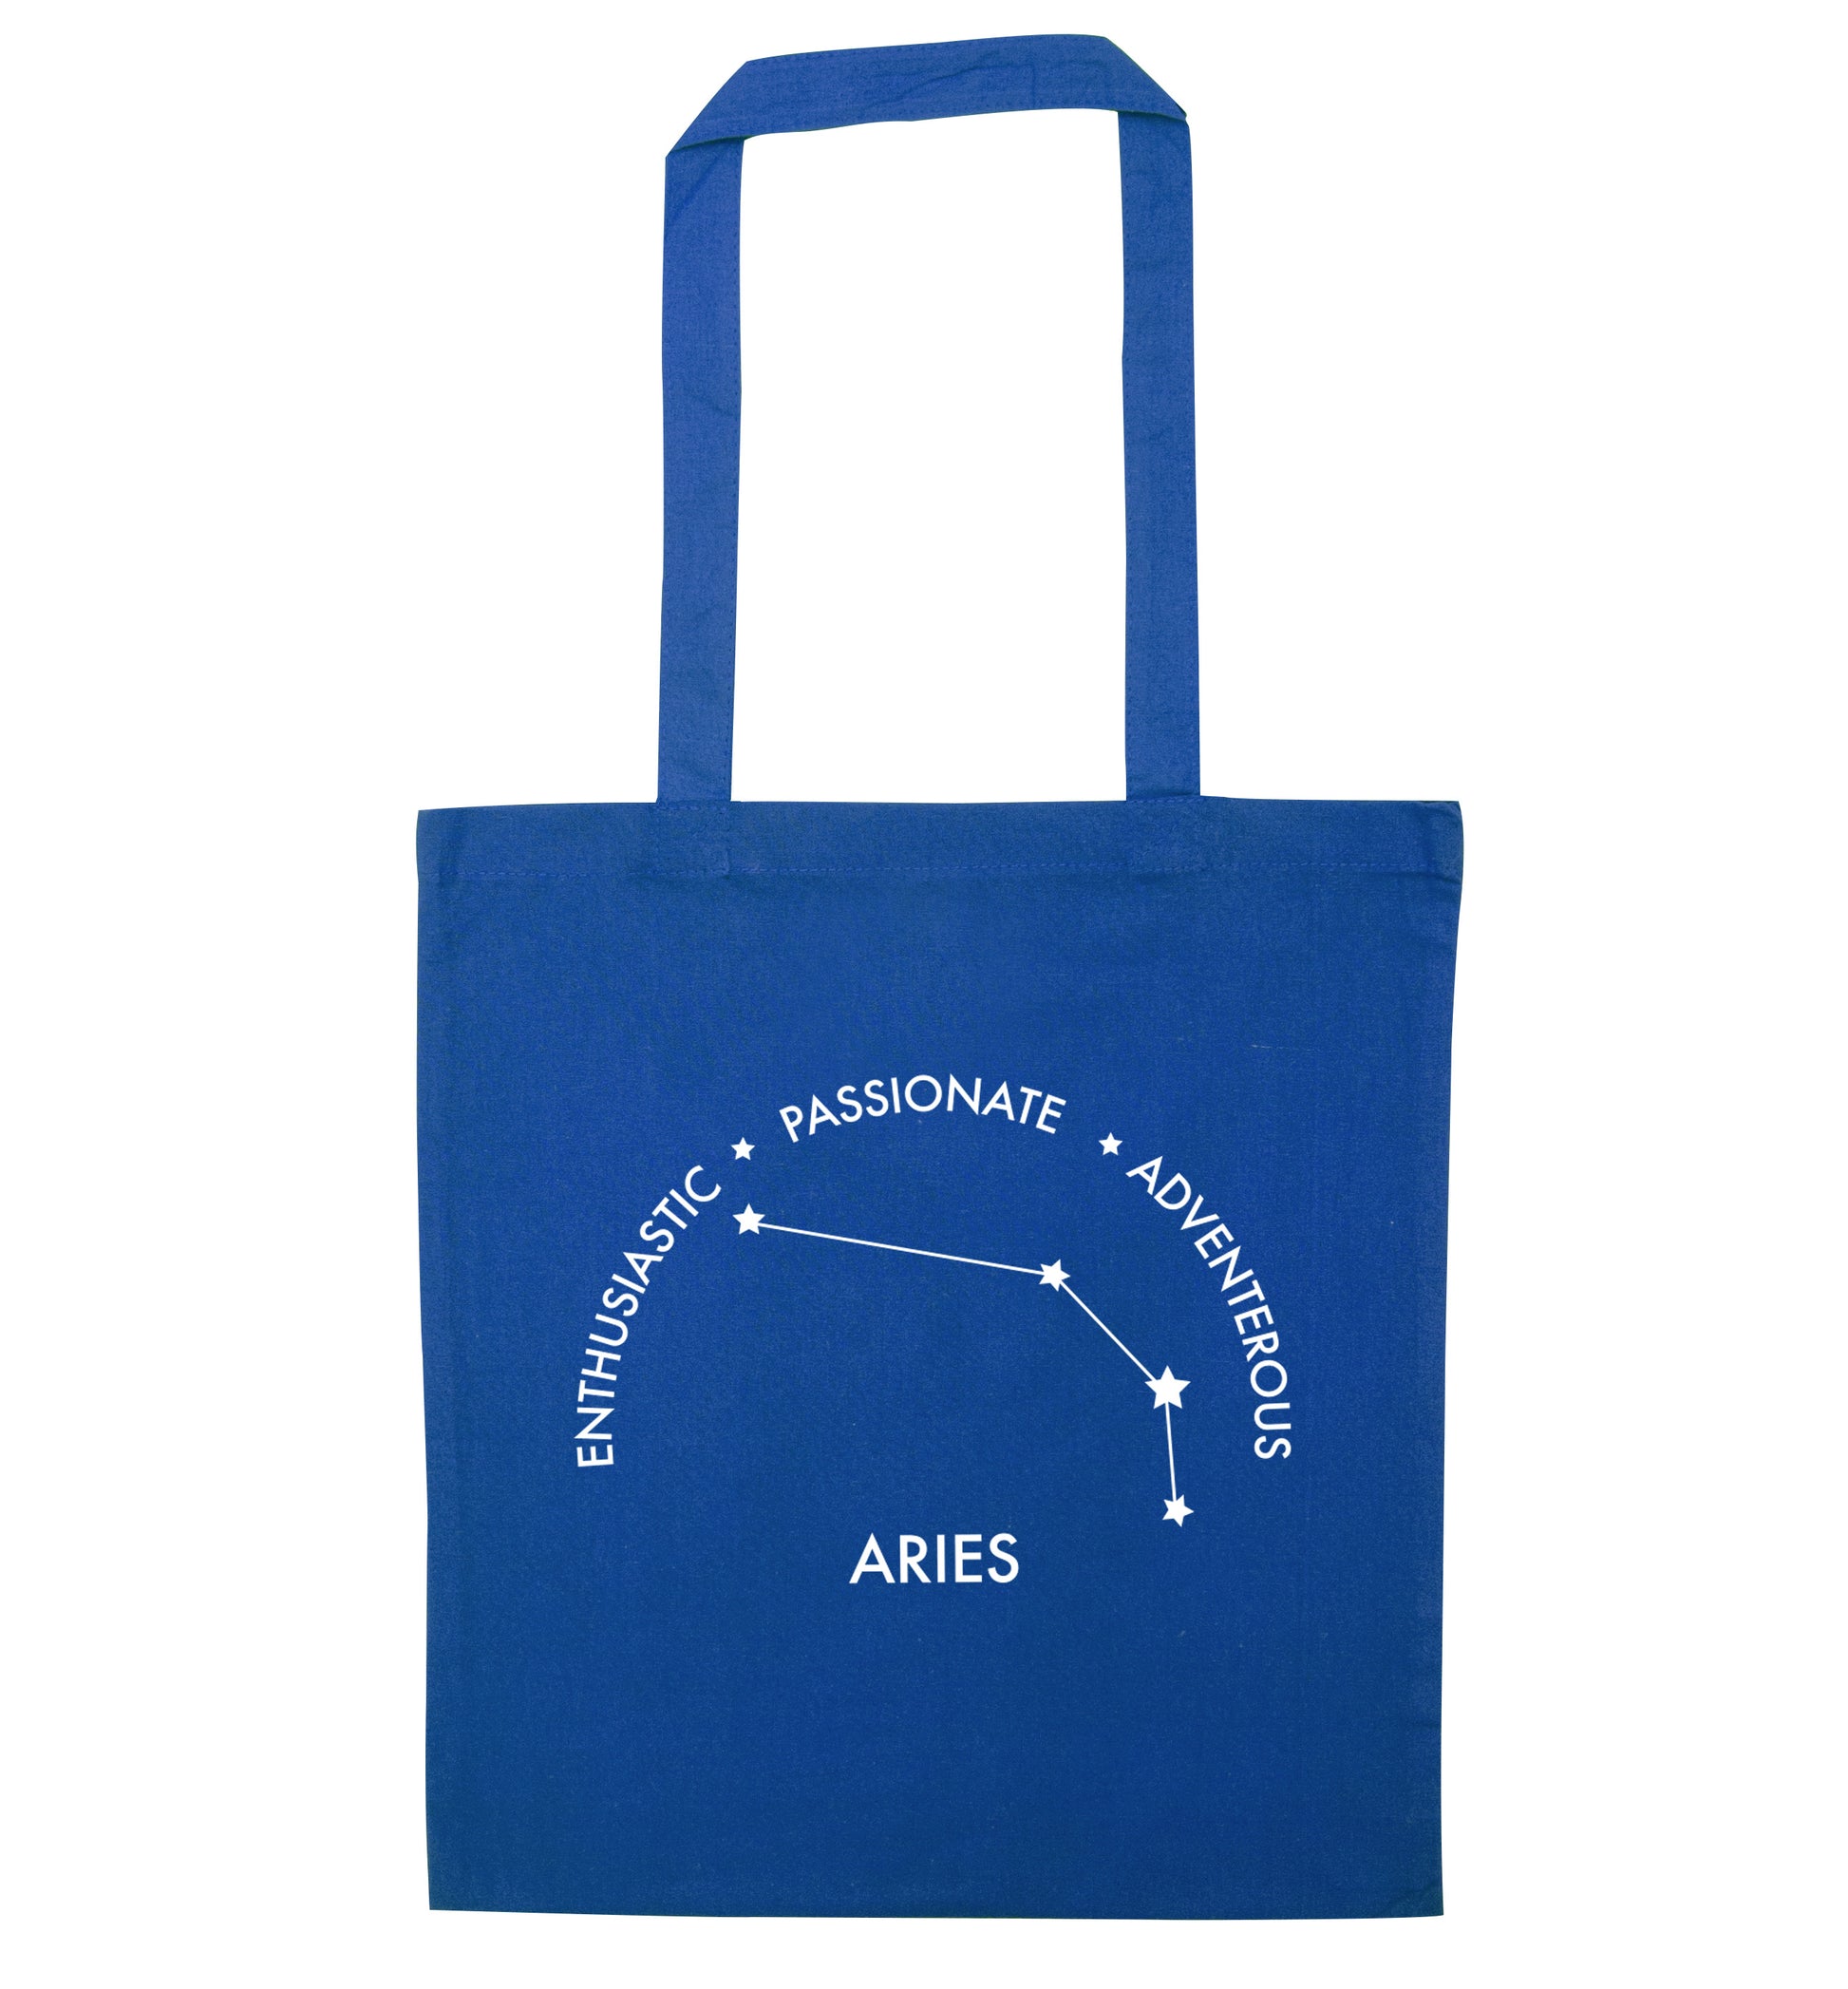 Aries enthusiastic | passionate | adventerous blue tote bag